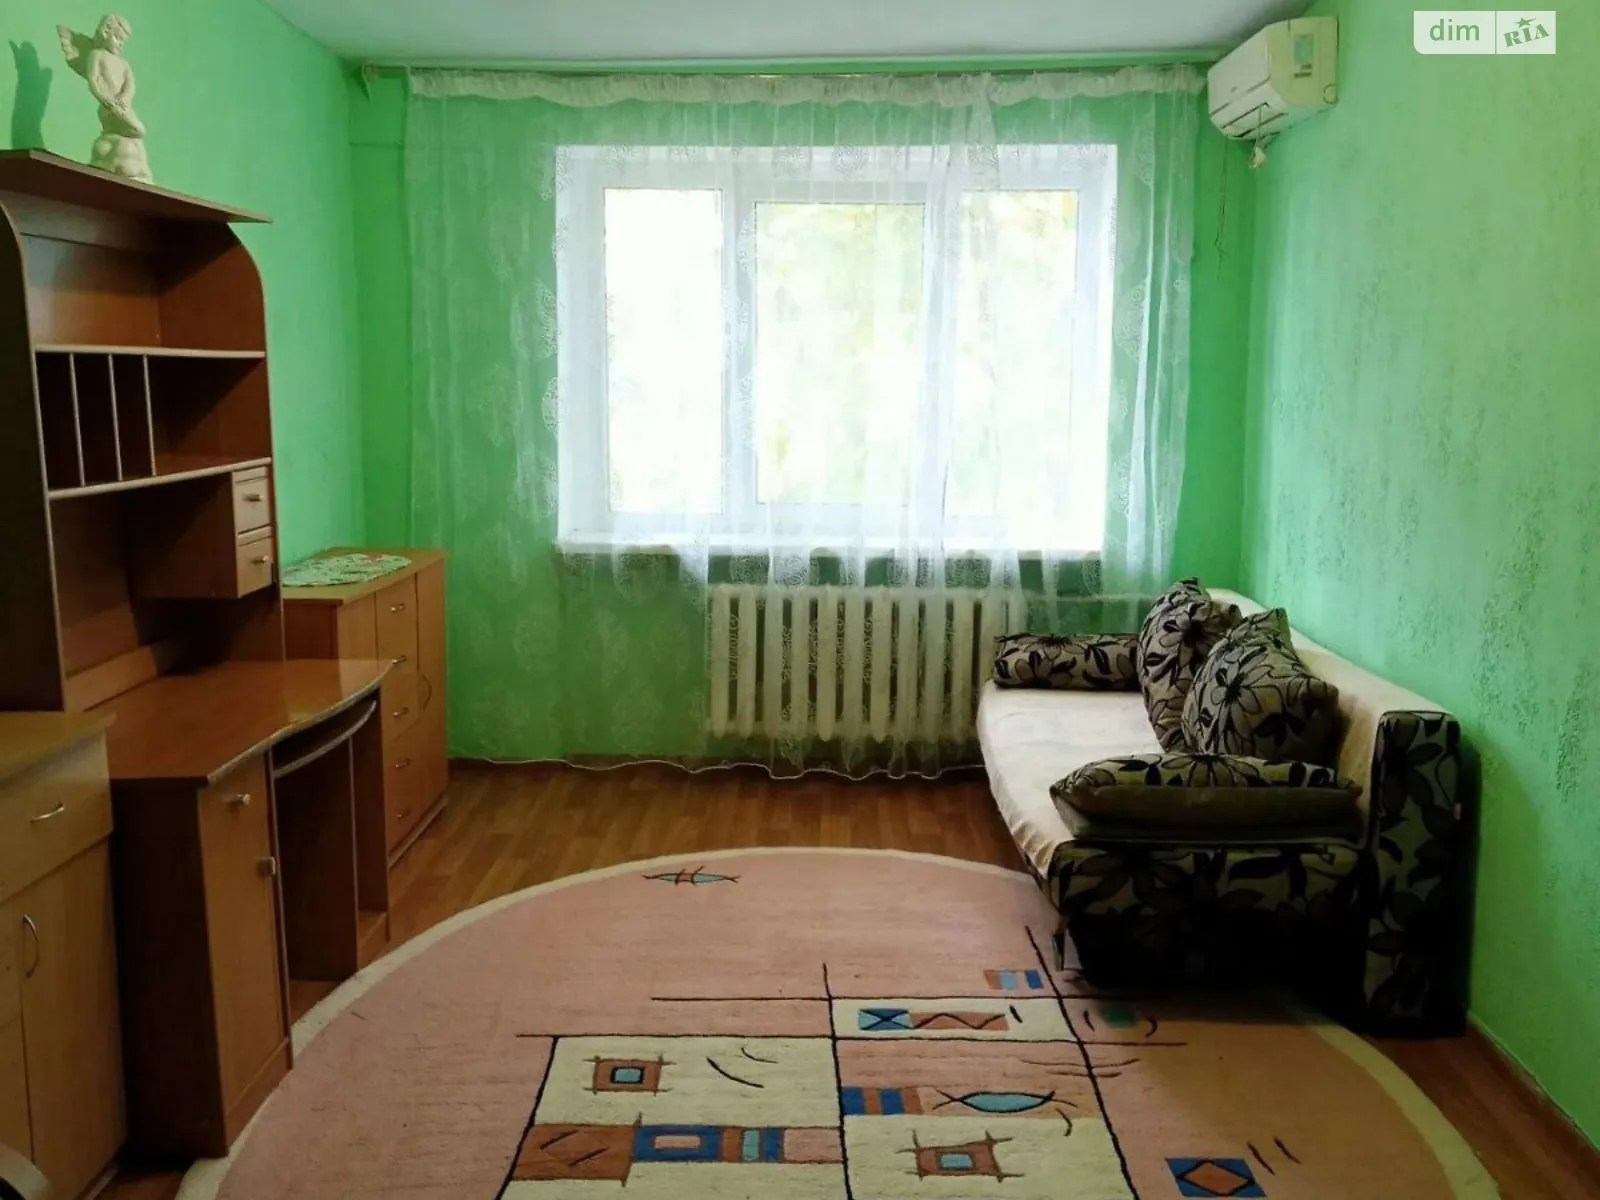 Продается комната 25 кв. м в Одессе, цена: 9000 $ - фото 1